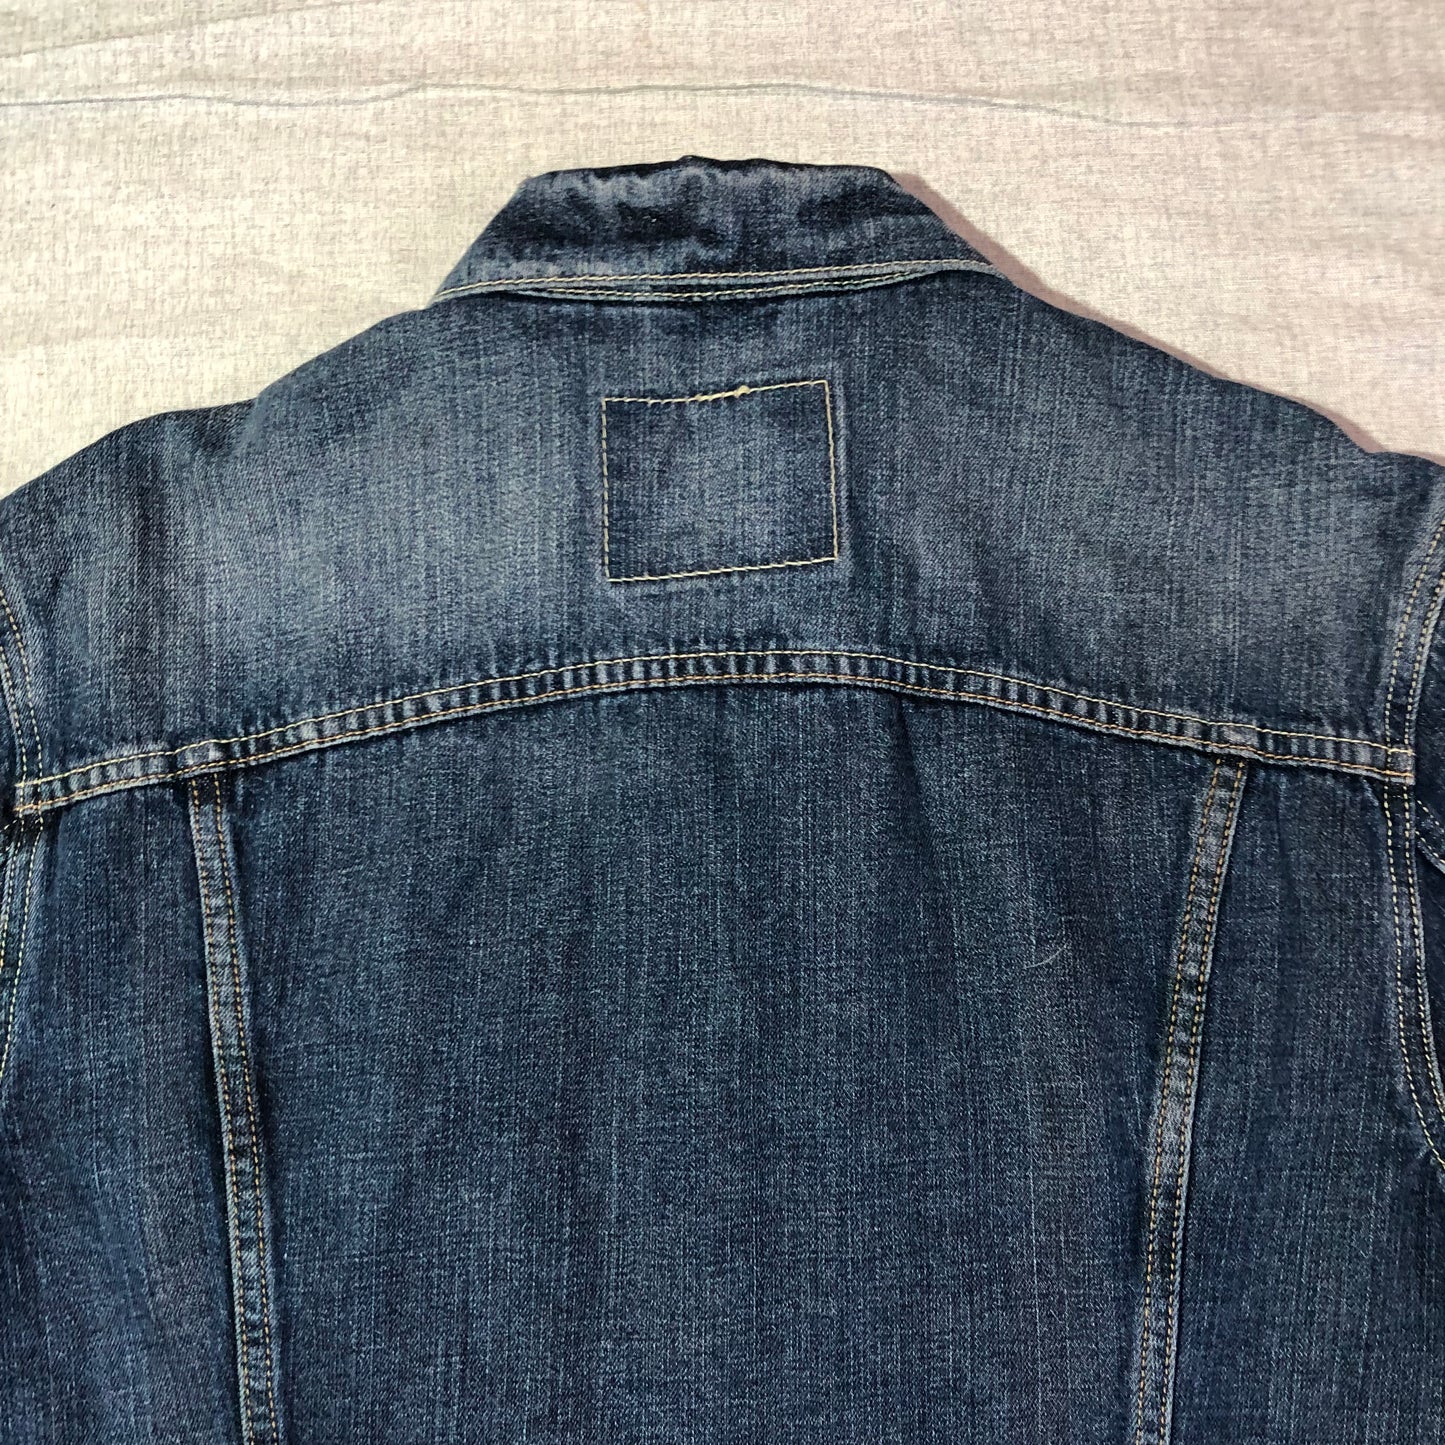 Levis Denim Jacket Mens Large Blue Jean Button Front Snap Cuff Distressed Collar